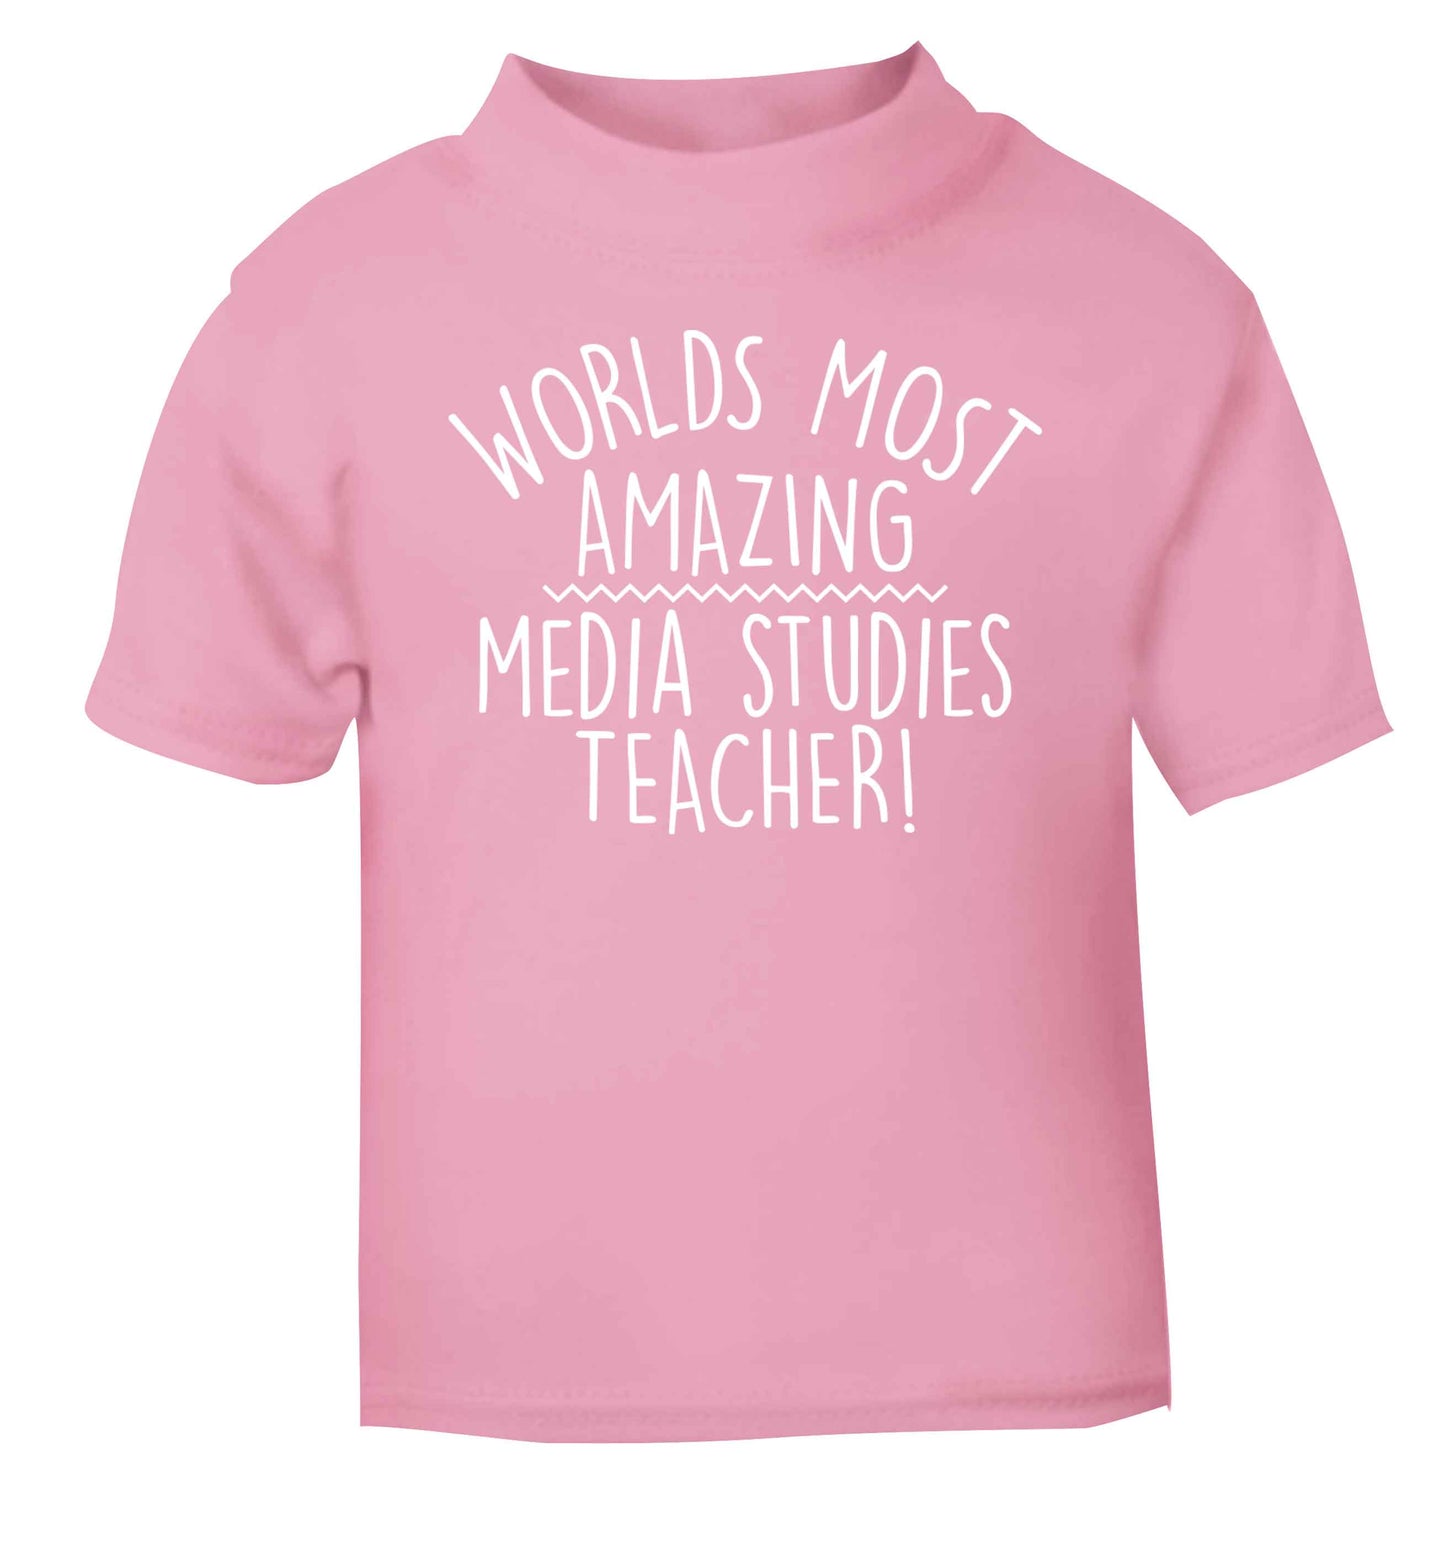 Worlds most amazing media studies teacher light pink baby toddler Tshirt 2 Years